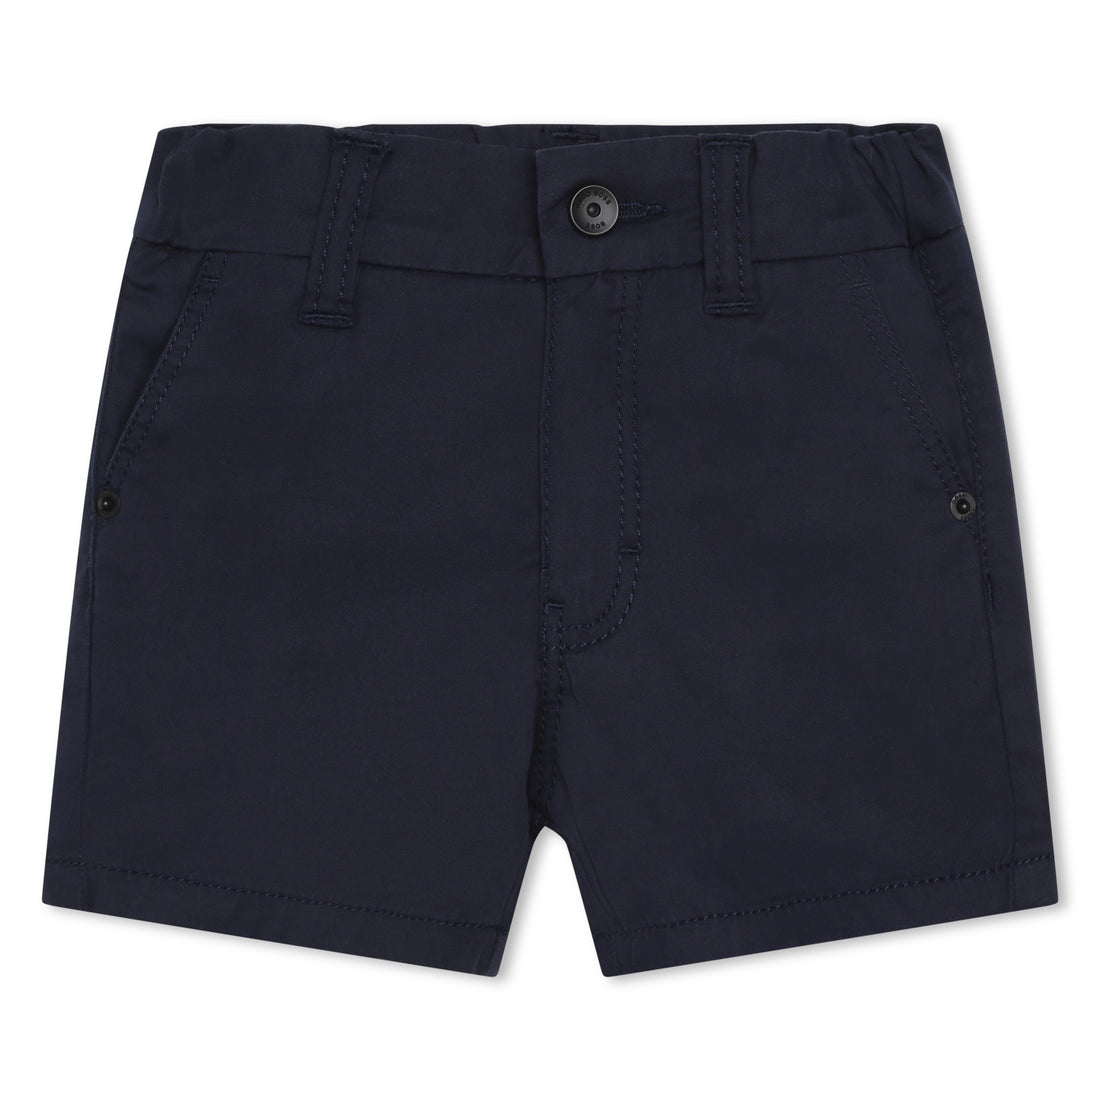 Hugo Boss Bermuda Shorts Style: J04464